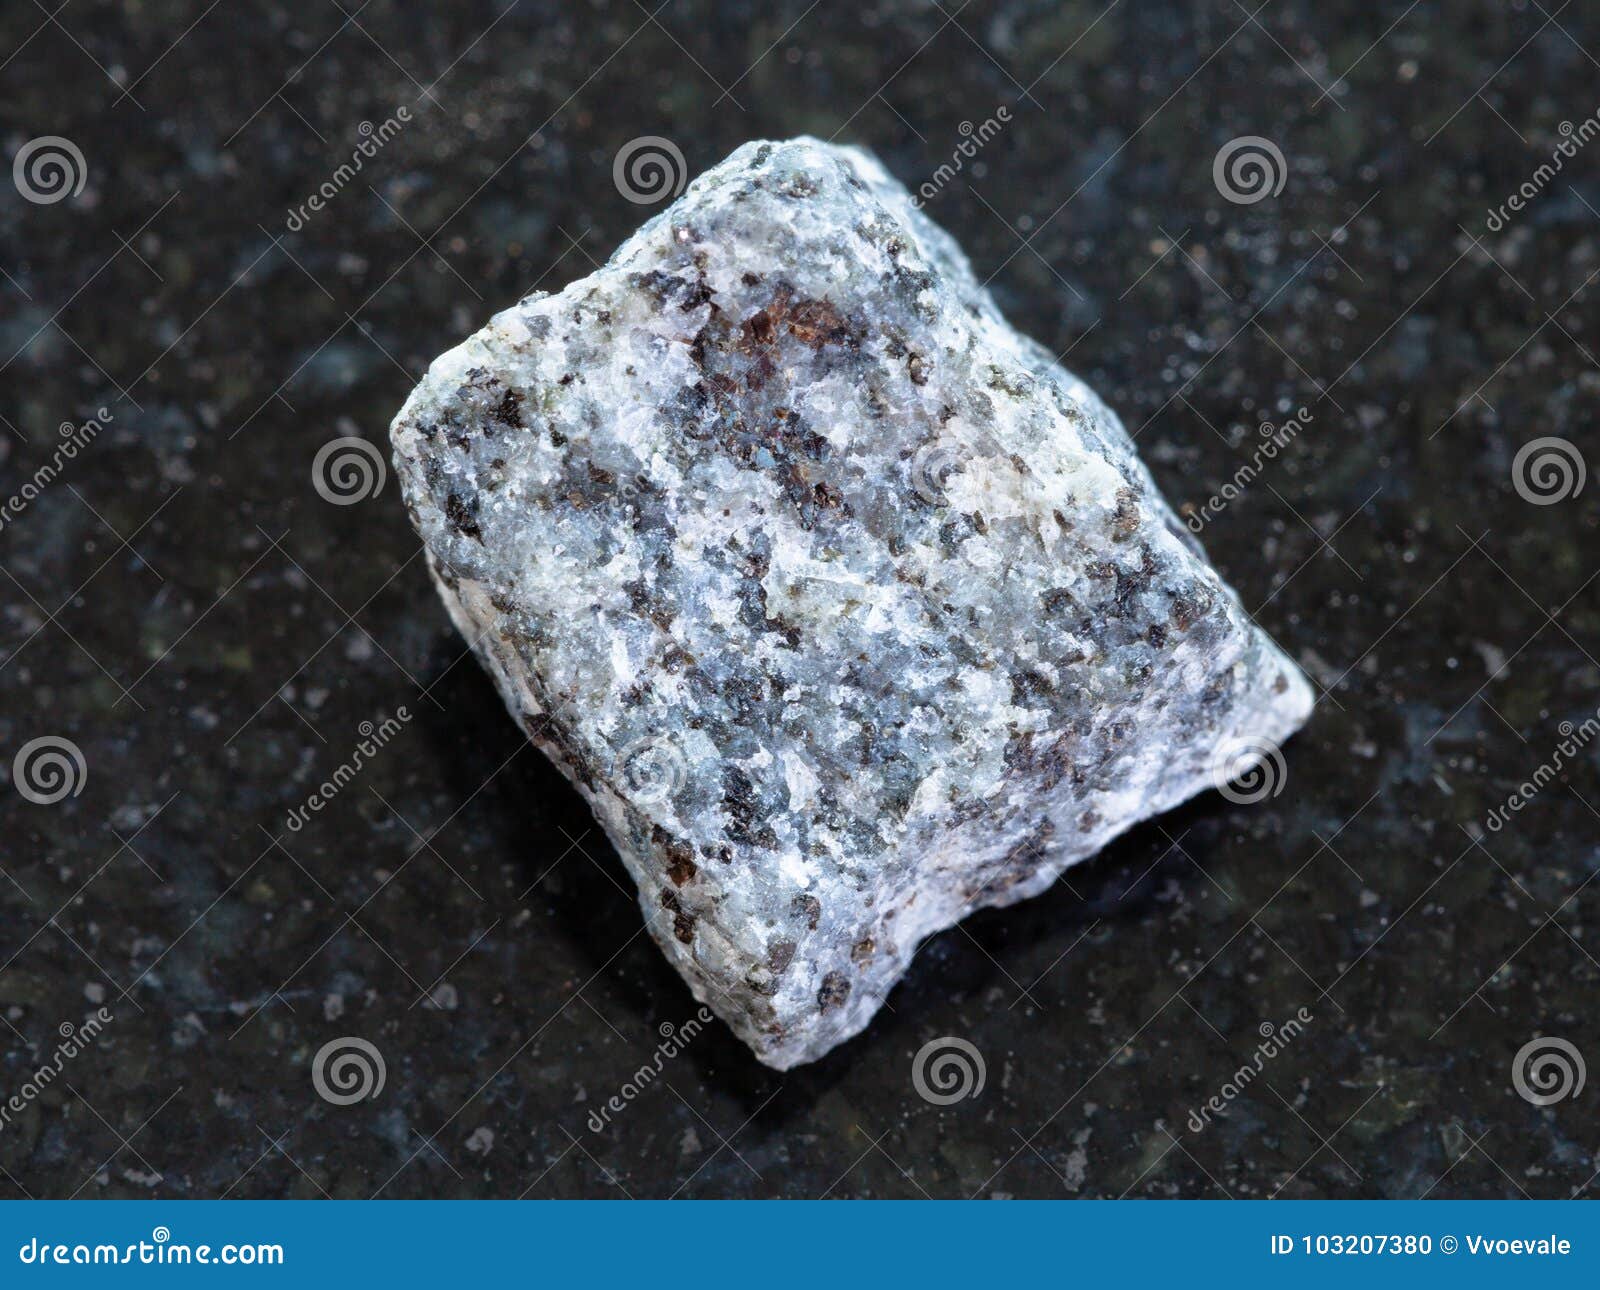 raw gabbro stone on dark background